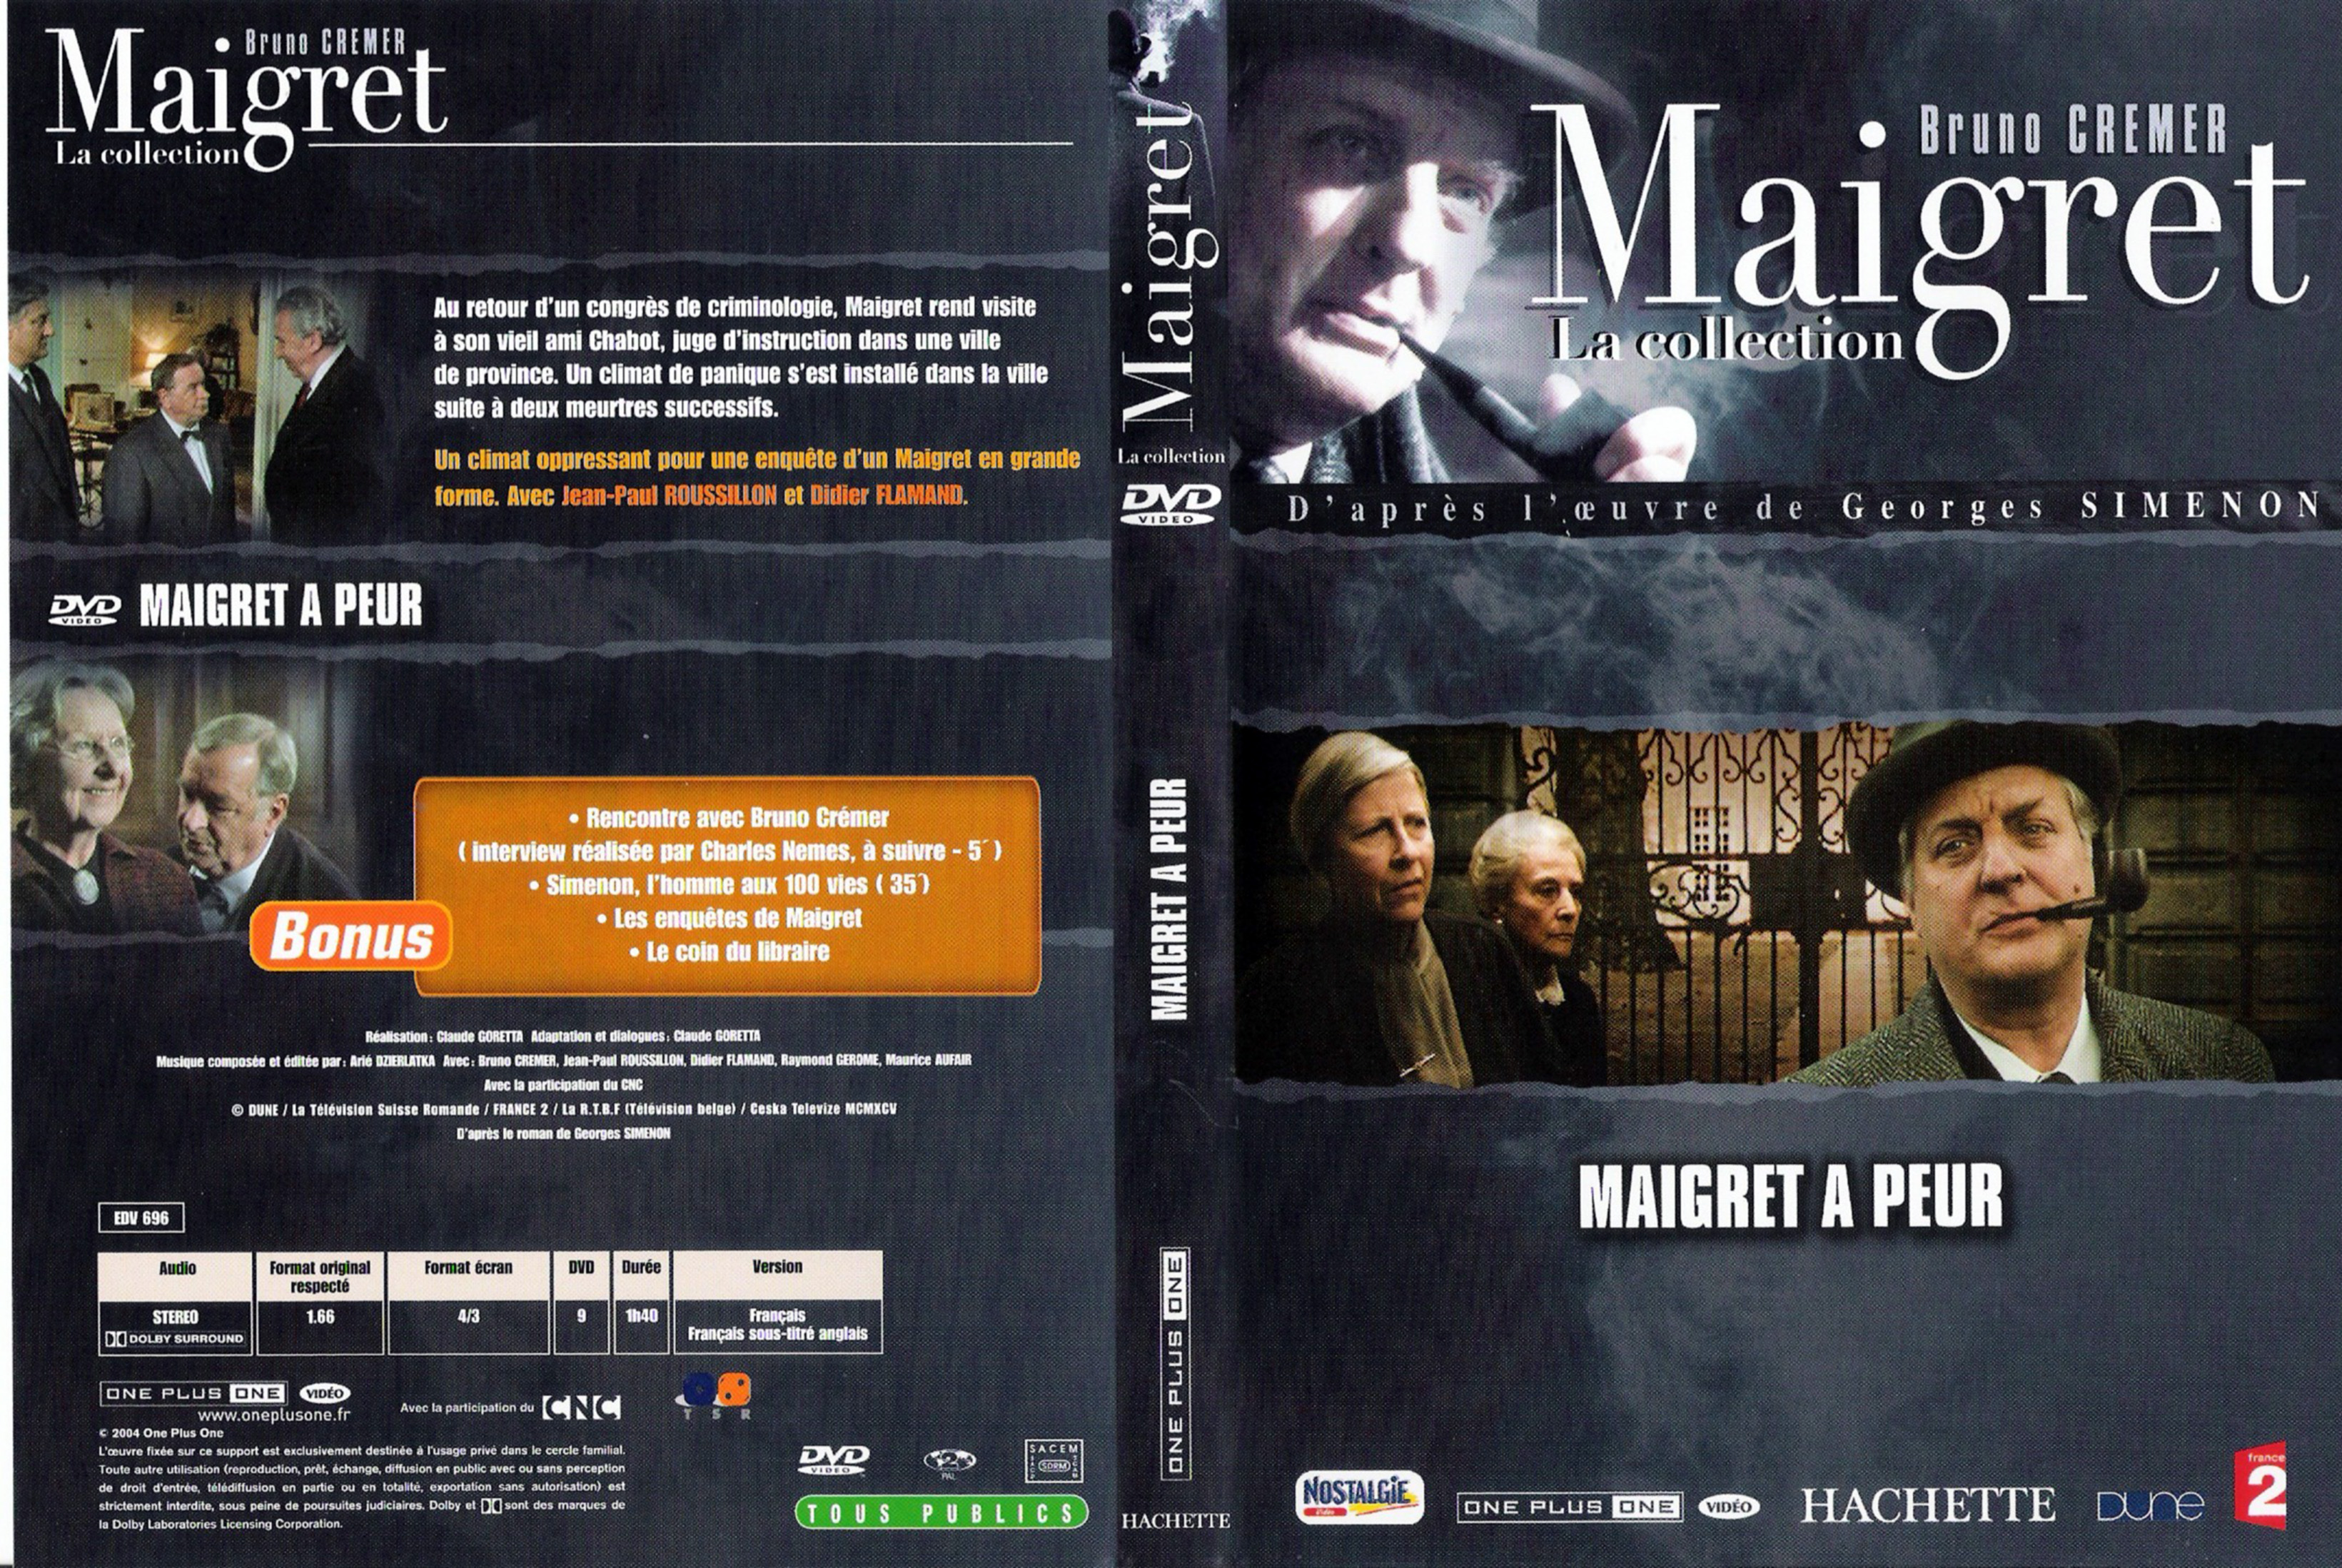 Jaquette DVD Maigret a peur (Bruno Cremer)